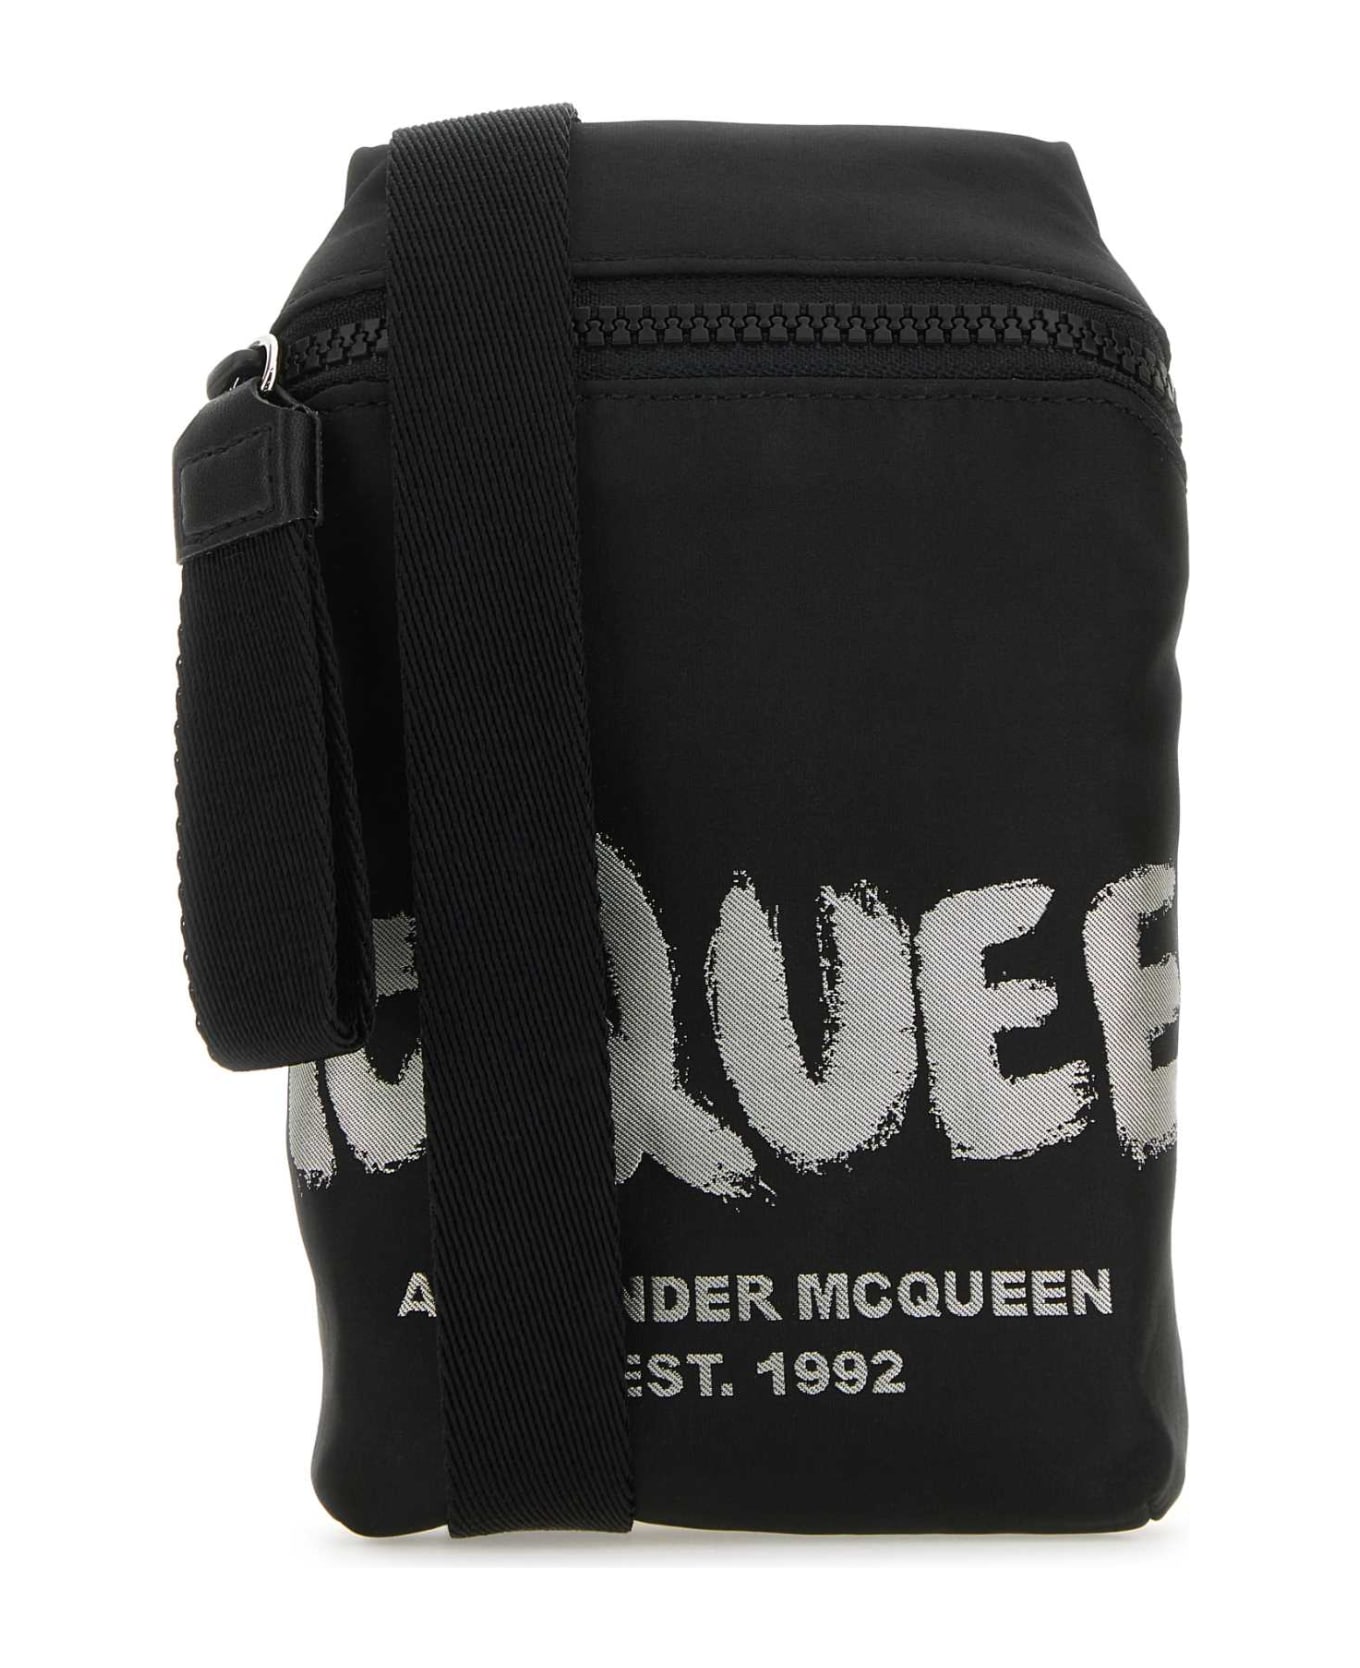 Alexander McQueen Black Fabric Mcqueen Graffiti Crossbody Bag - BLACKOFFWHITE ショルダーバッグ